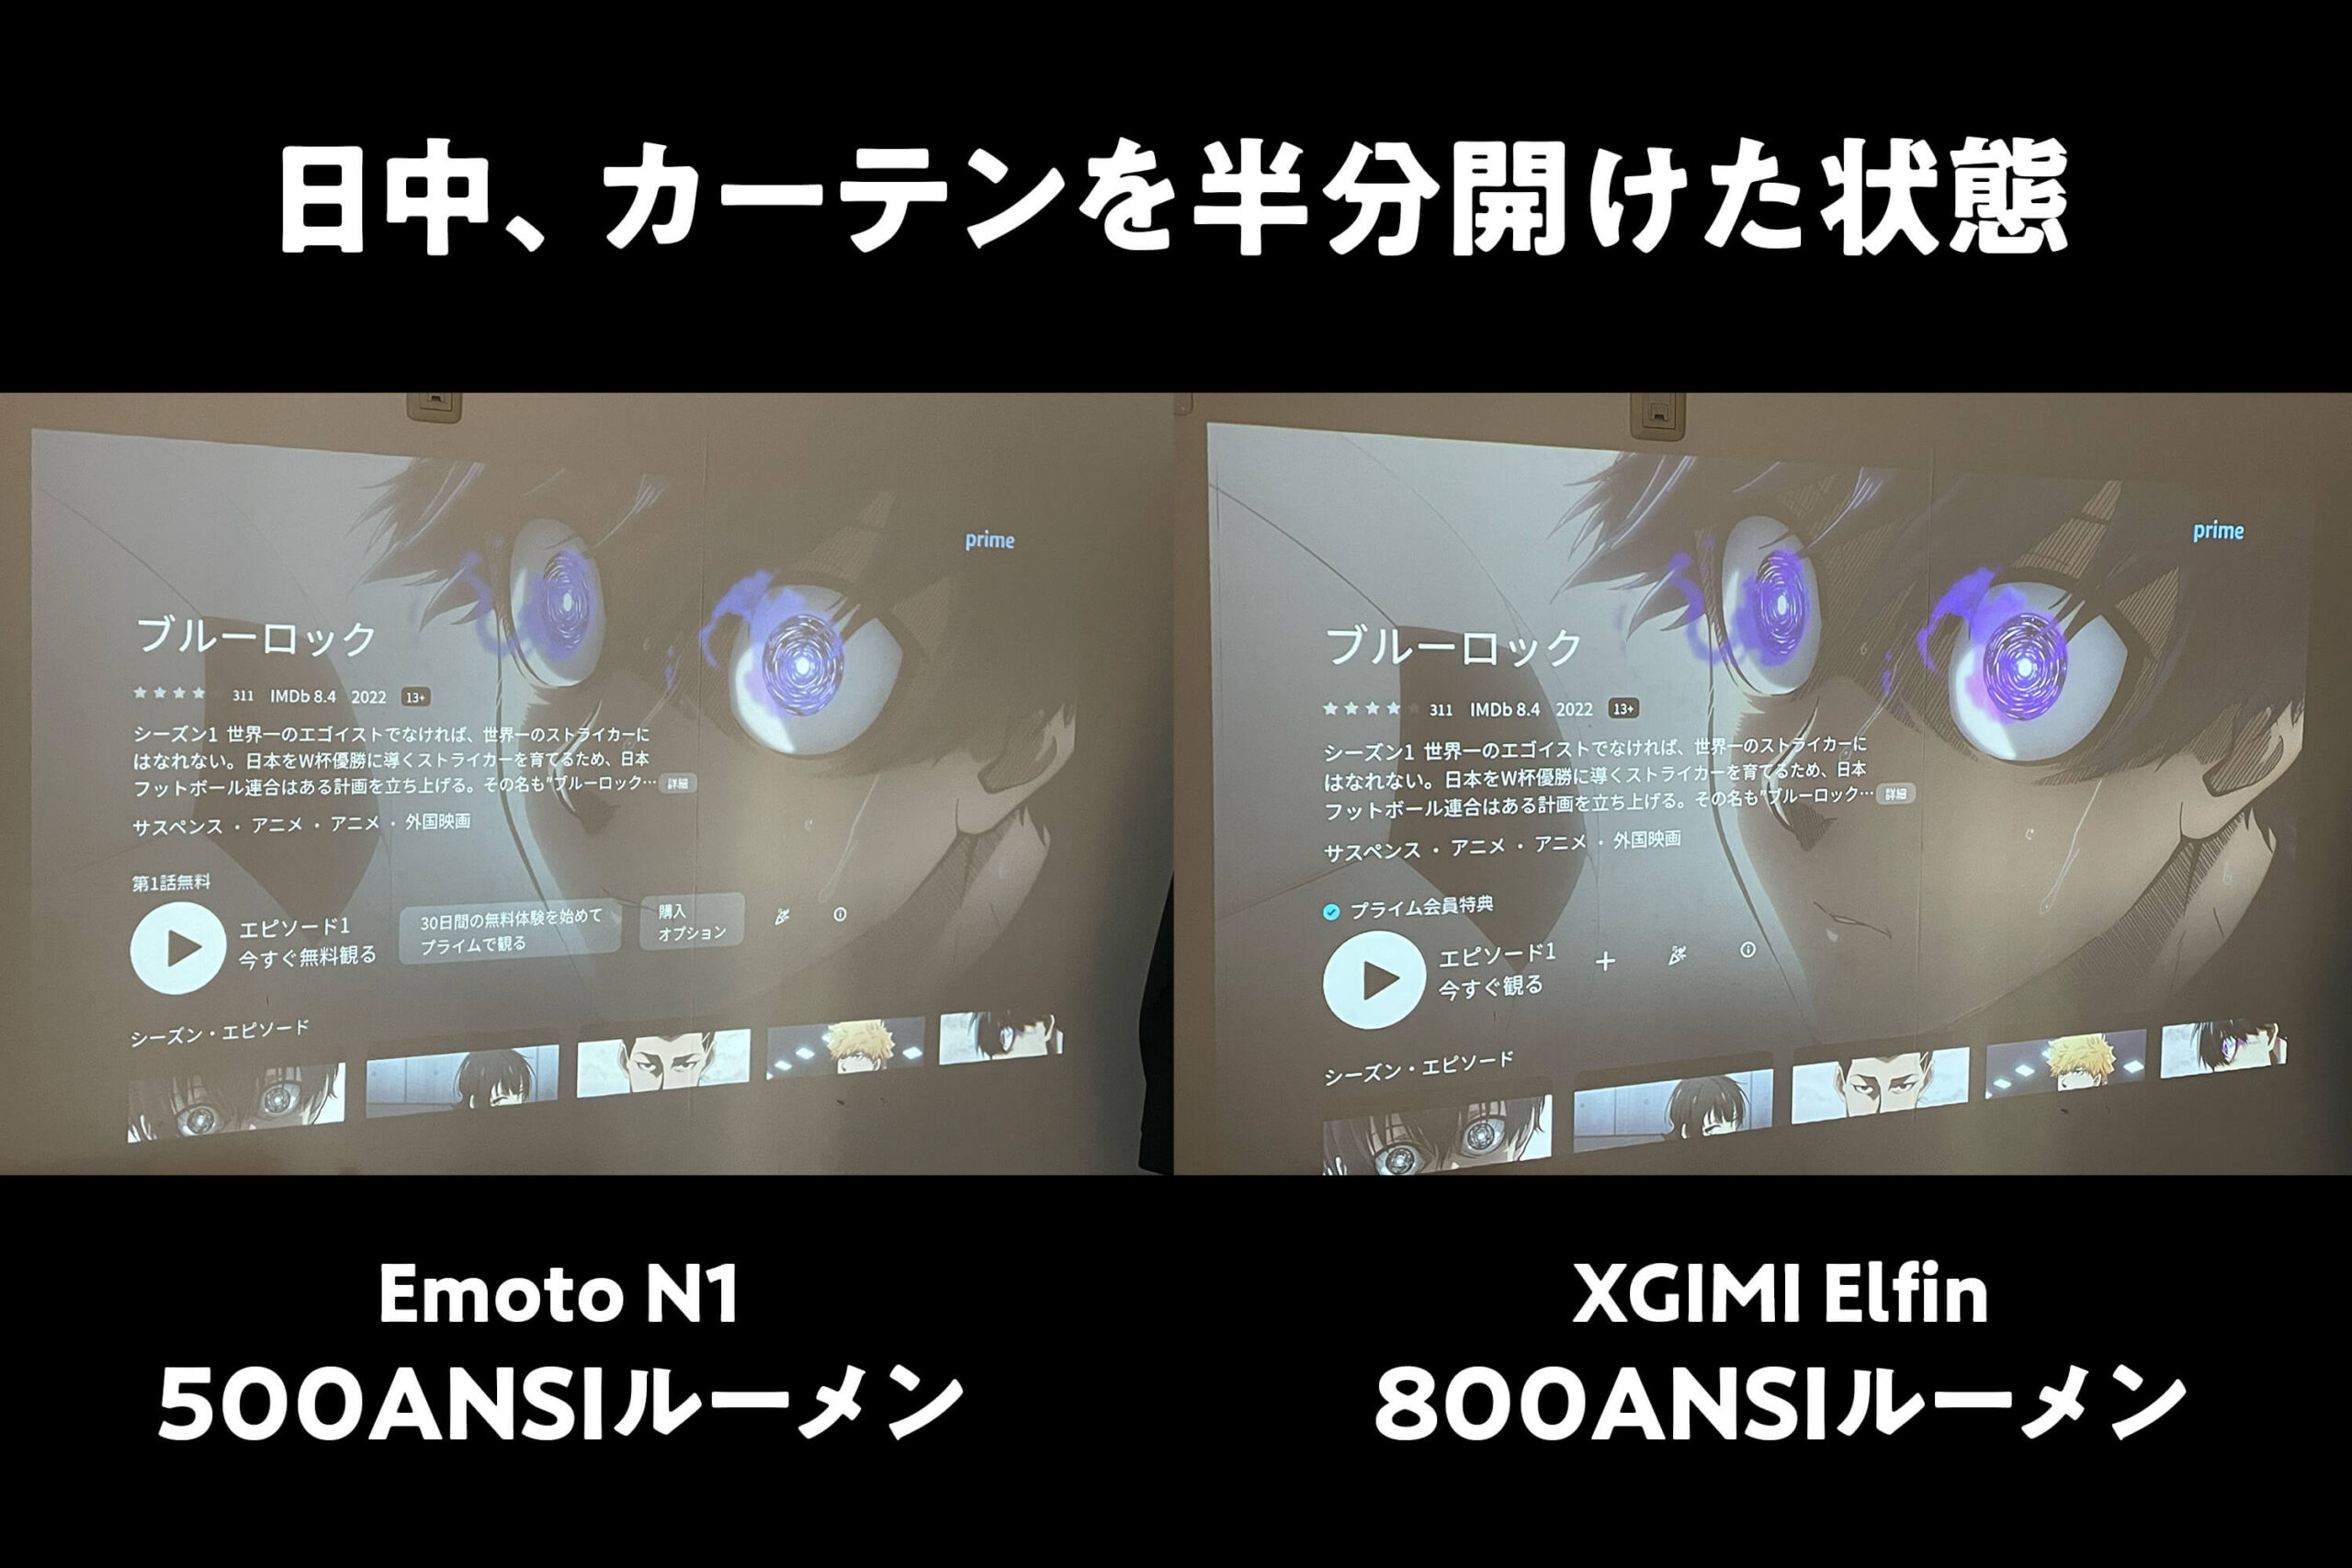 「Emotn(エモートン) N1」と「XGIMI Elfin」の比較1